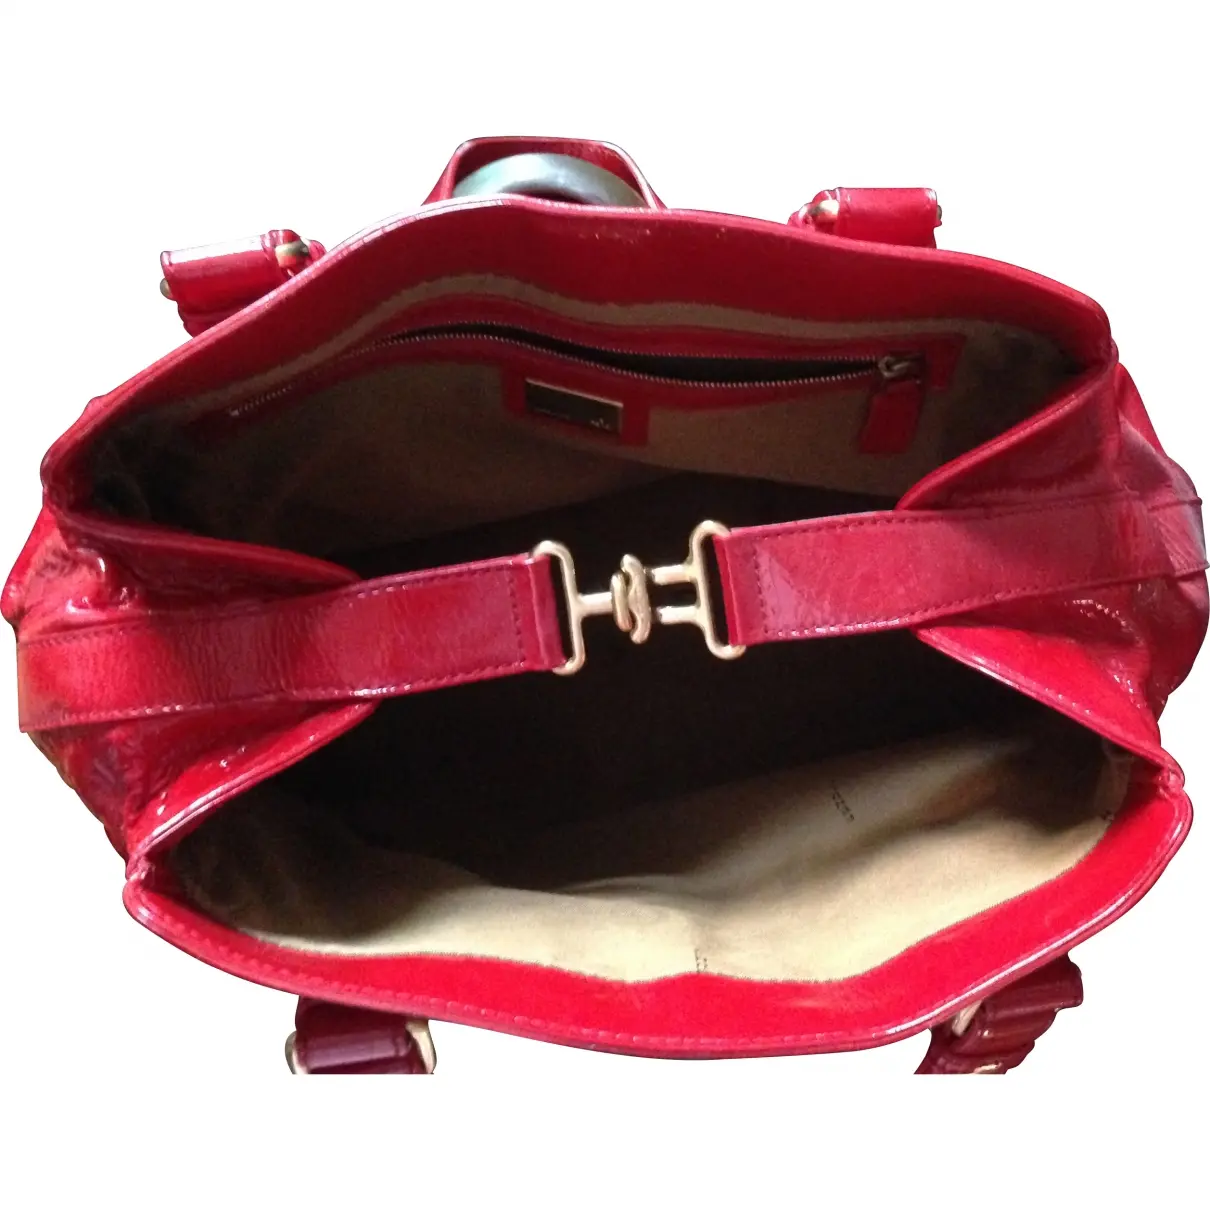 Fendi Red Patent leather Handbag for sale